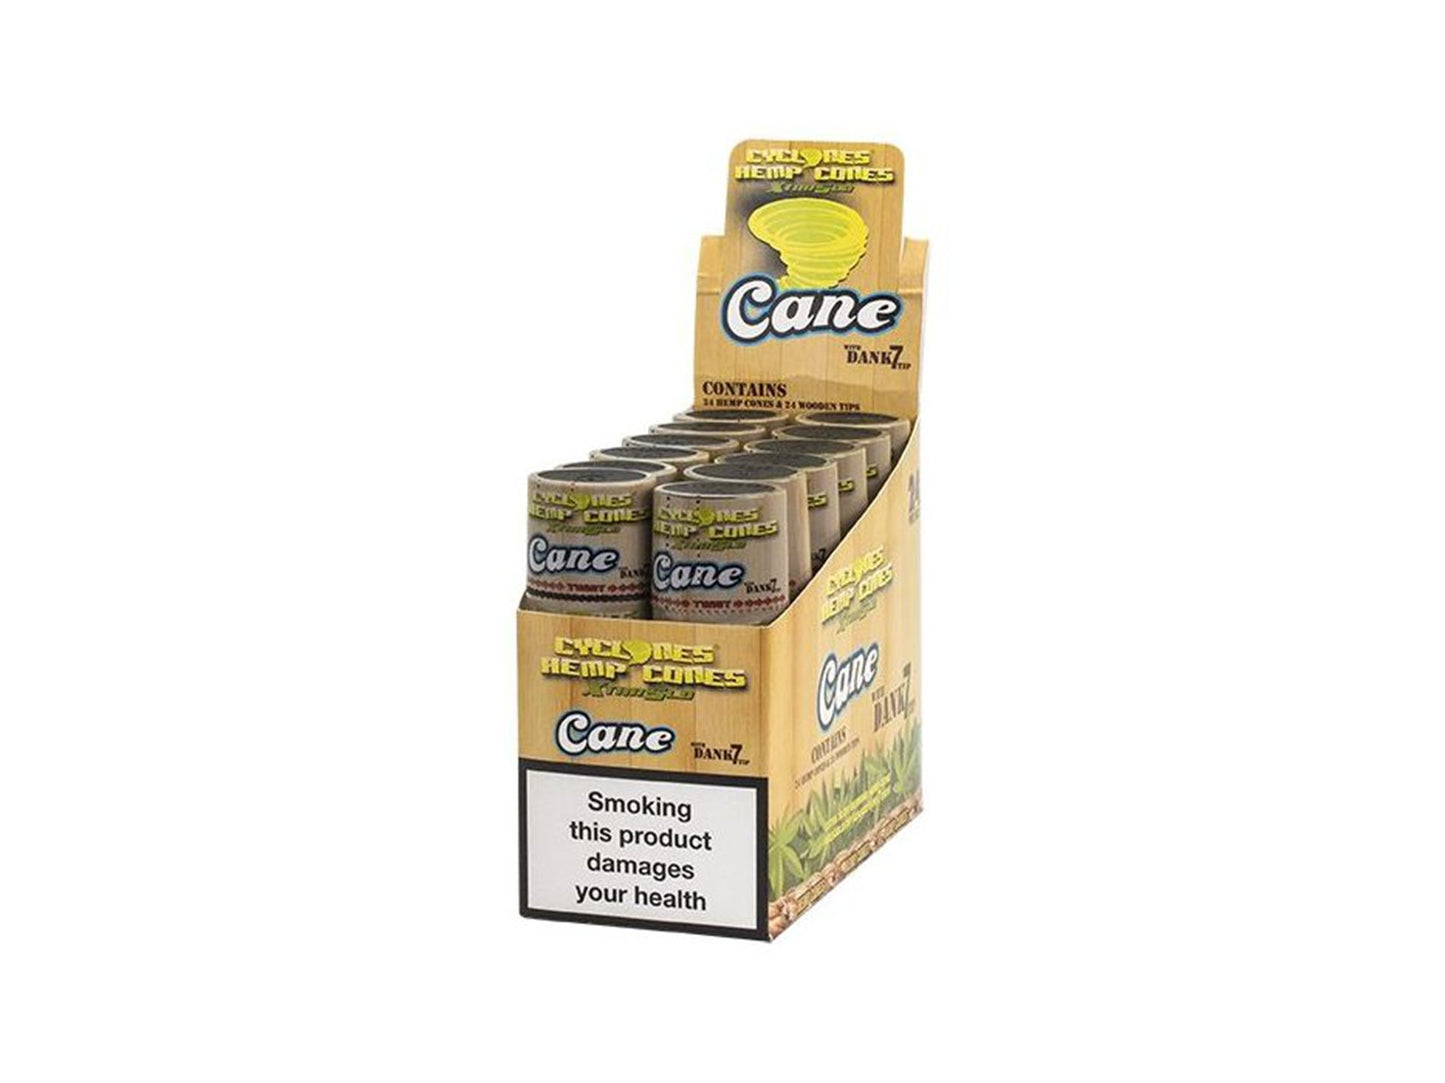 CYCLONES Hemp Cones (Sugar Cane) 12pcs x2 In Display - VIR Wholesale